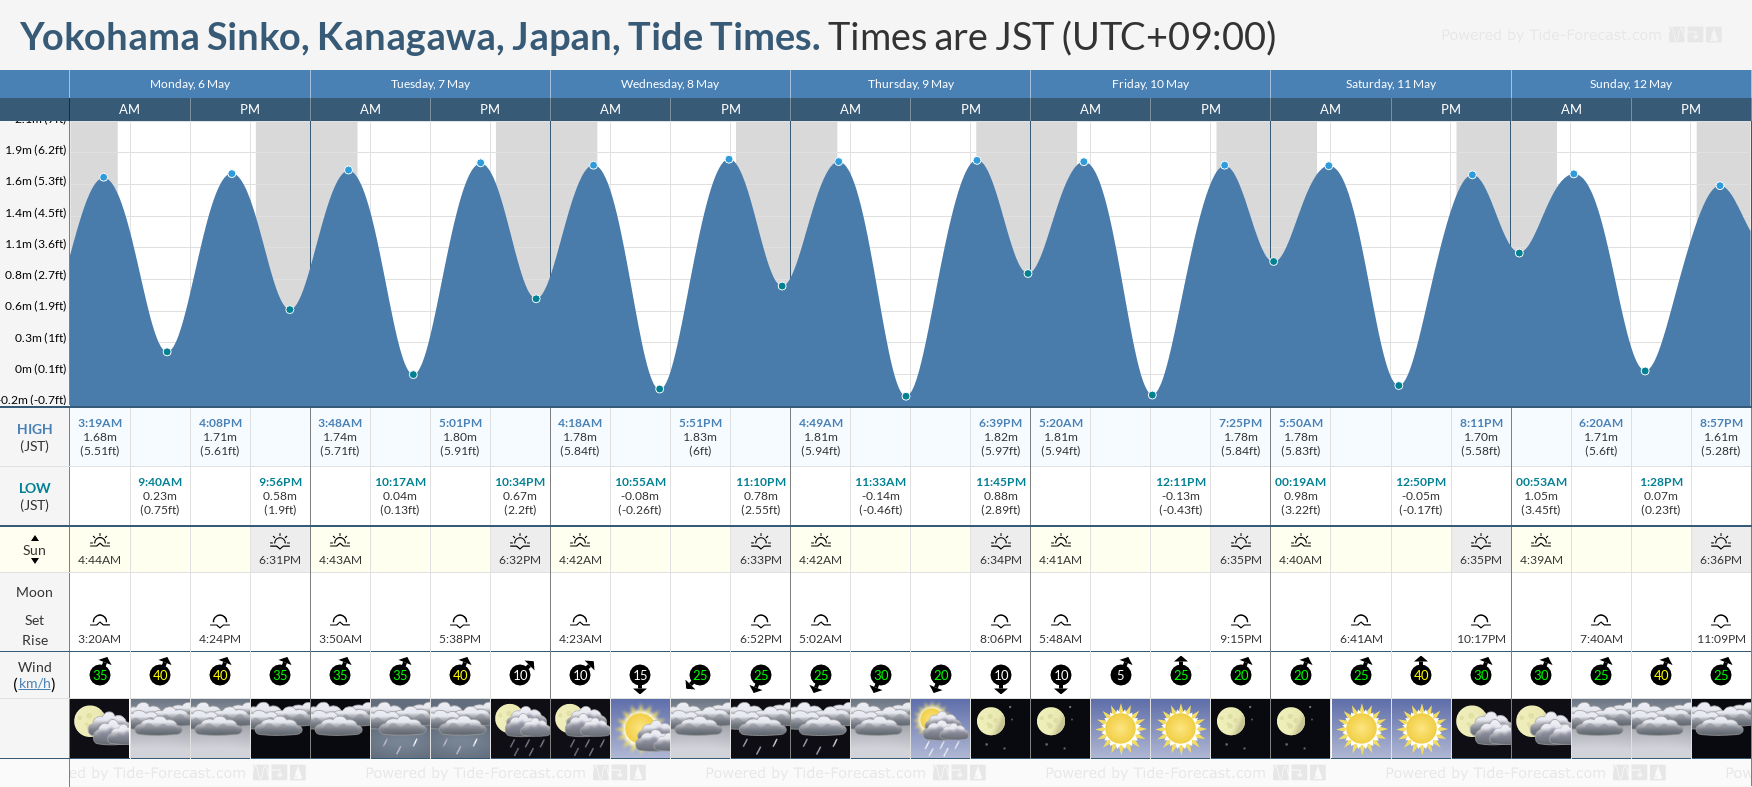 Yokohama Sinko, Kanagawa, Japan Tide Chart including high and low tide tide times for the next 7 days